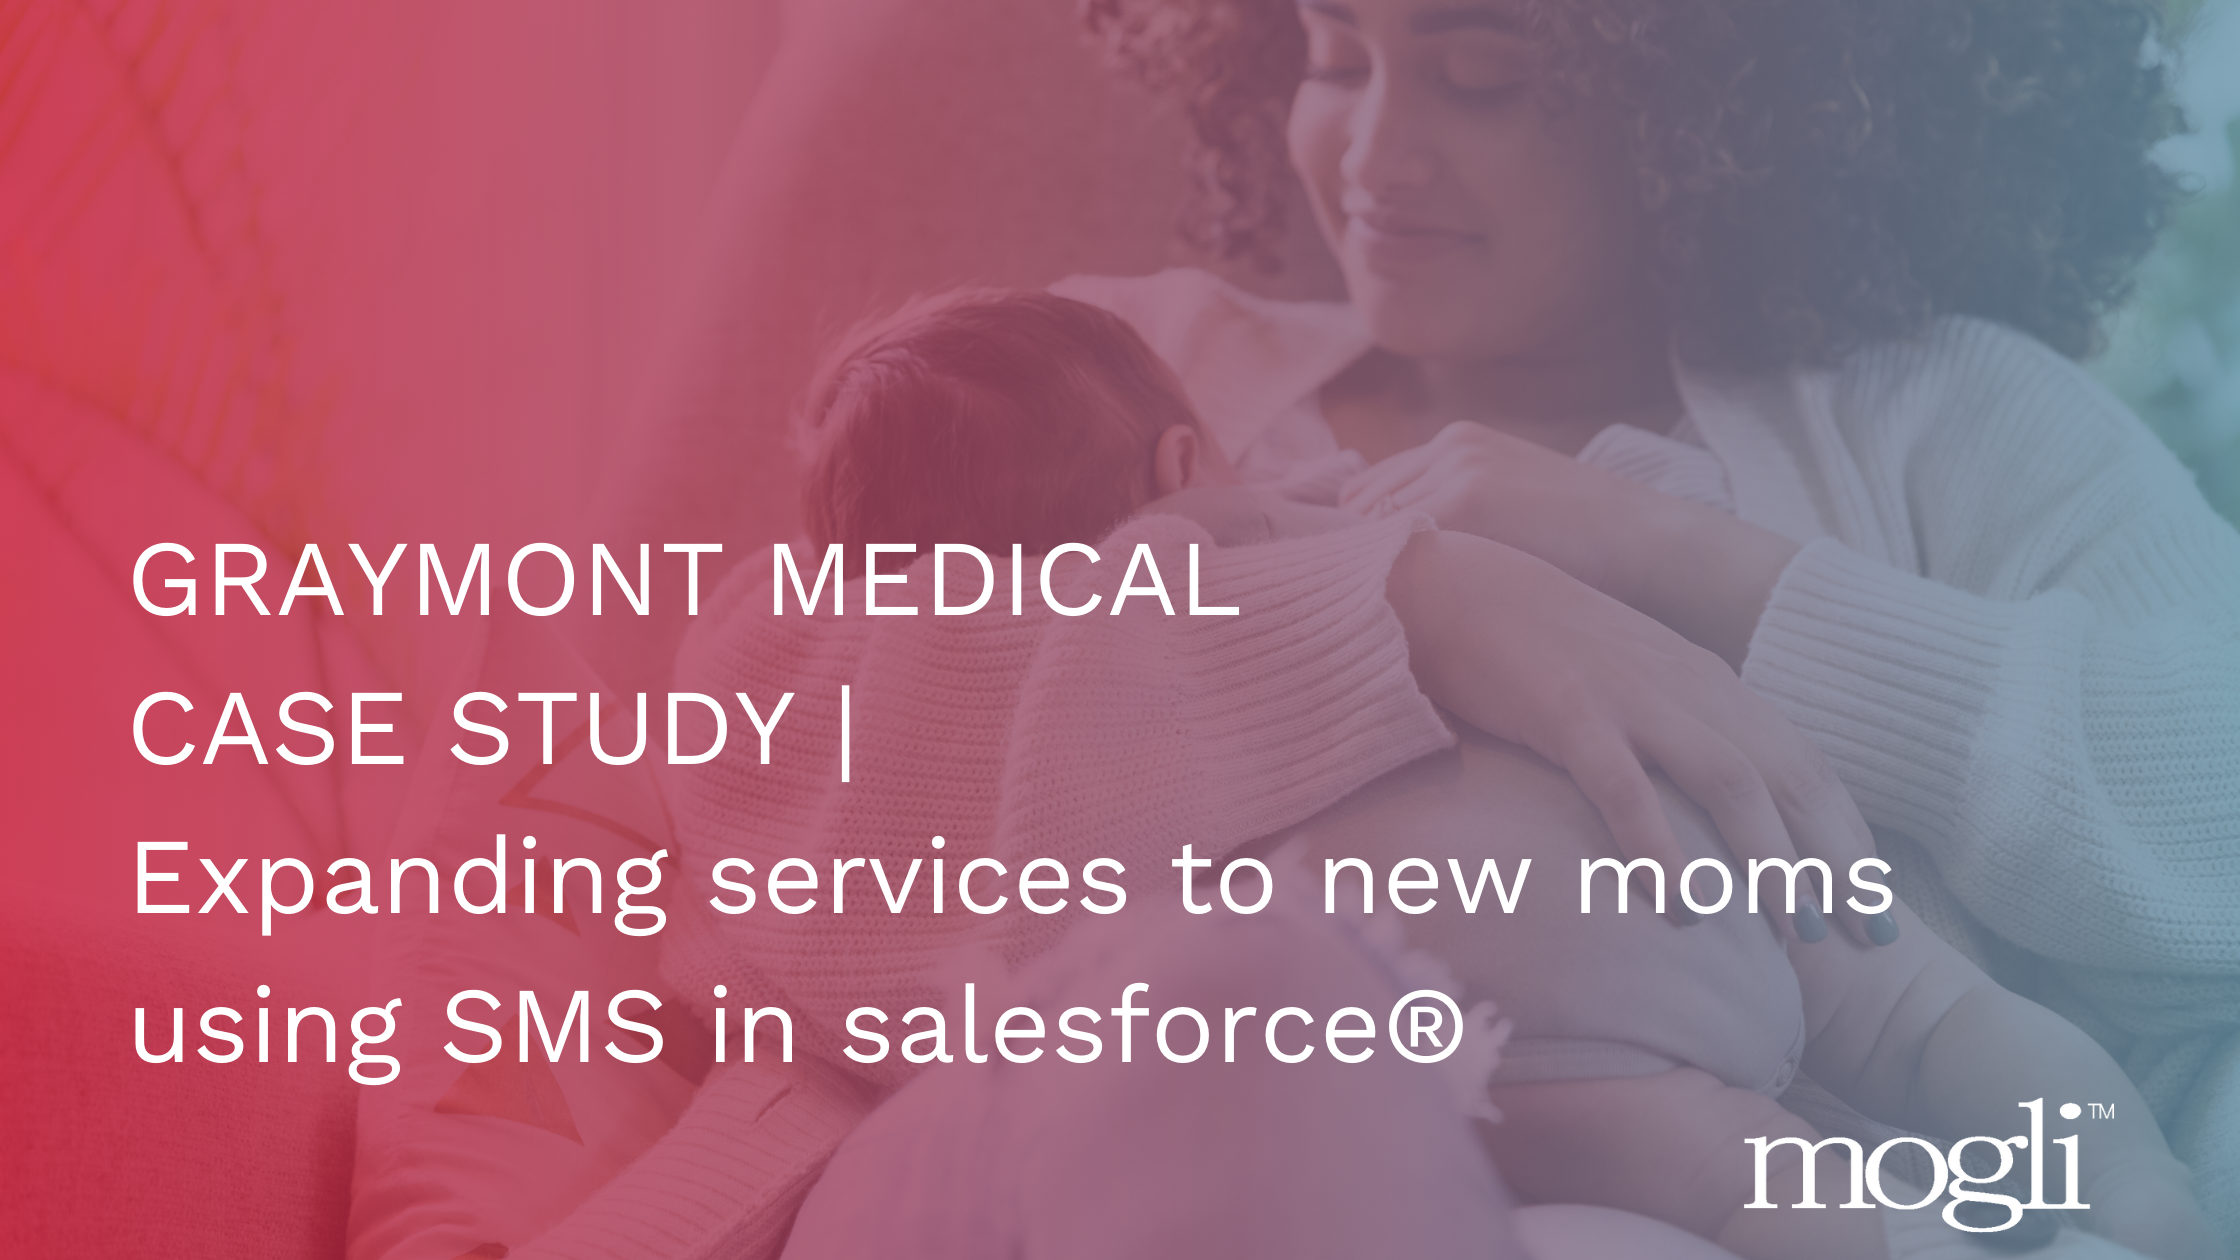 Graymont Medical SMS in Saleforce case study blog banner